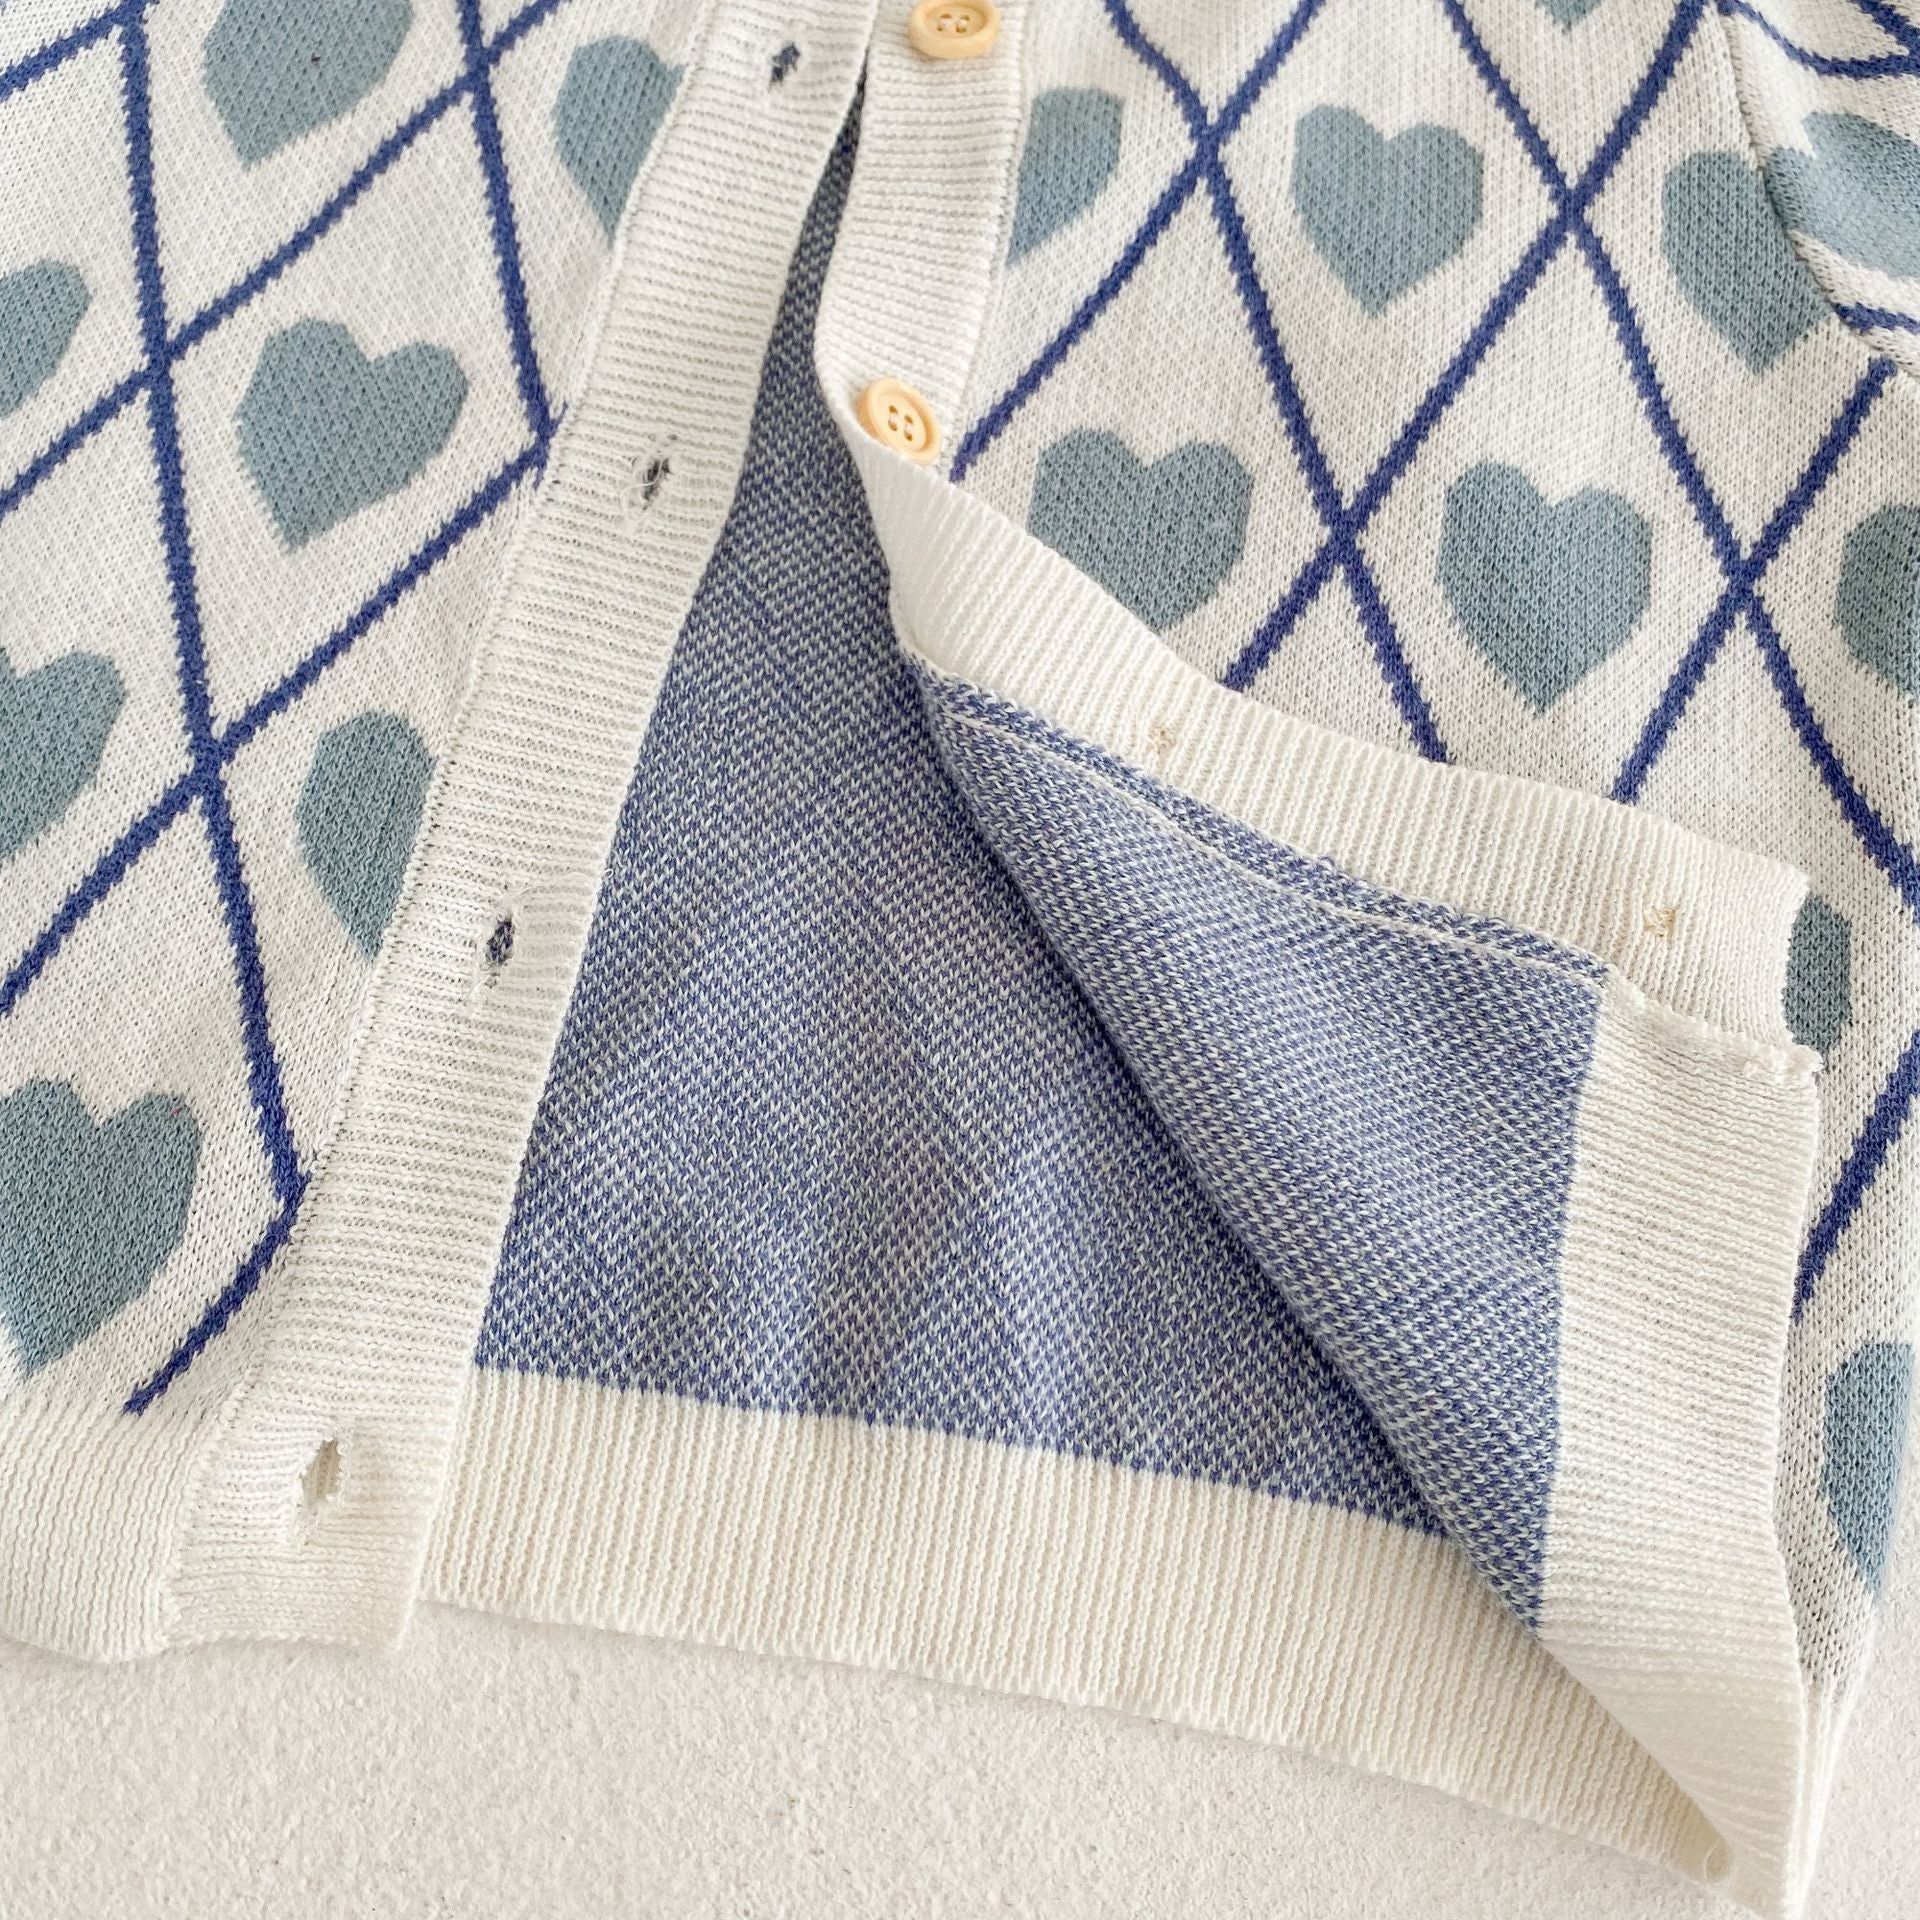 Blue heart cardigan/overalls [N3014]